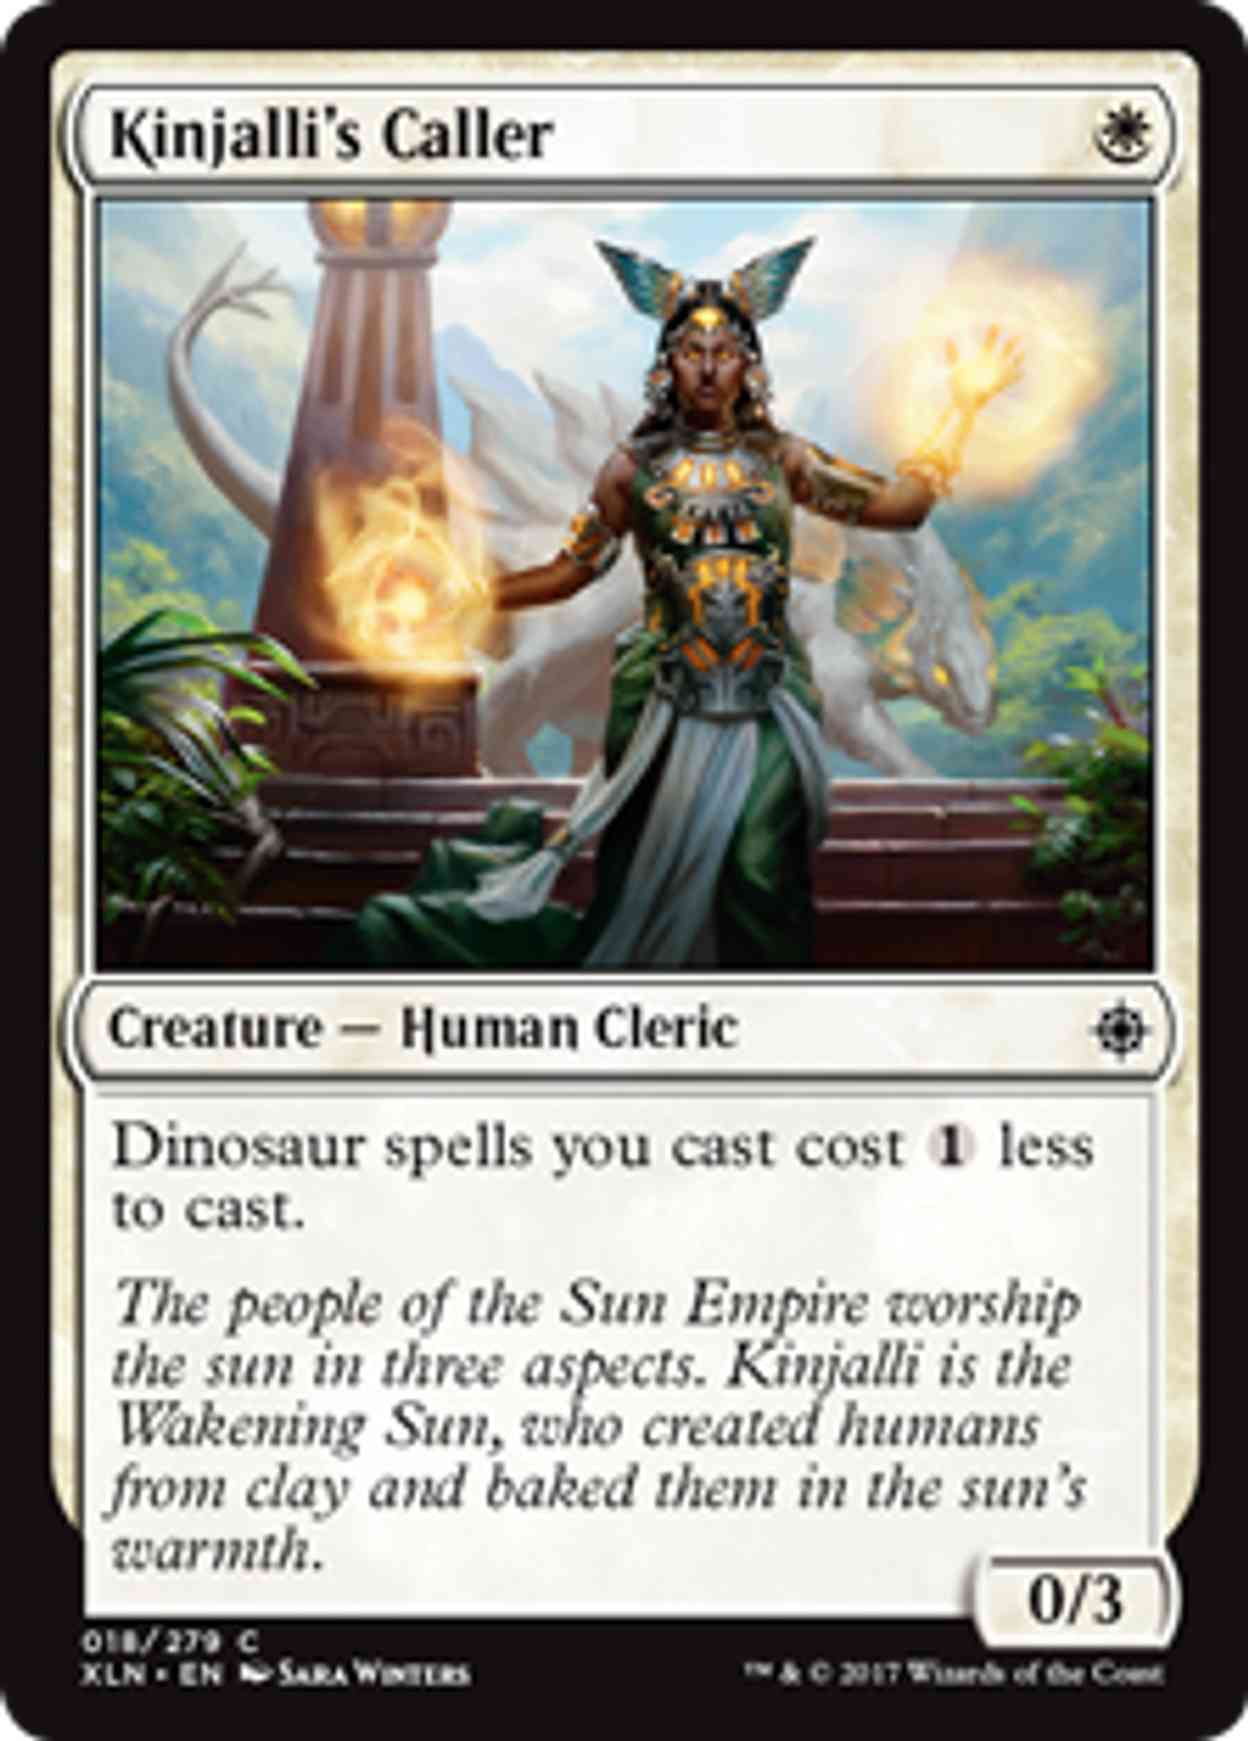 Kinjalli's Caller magic card front